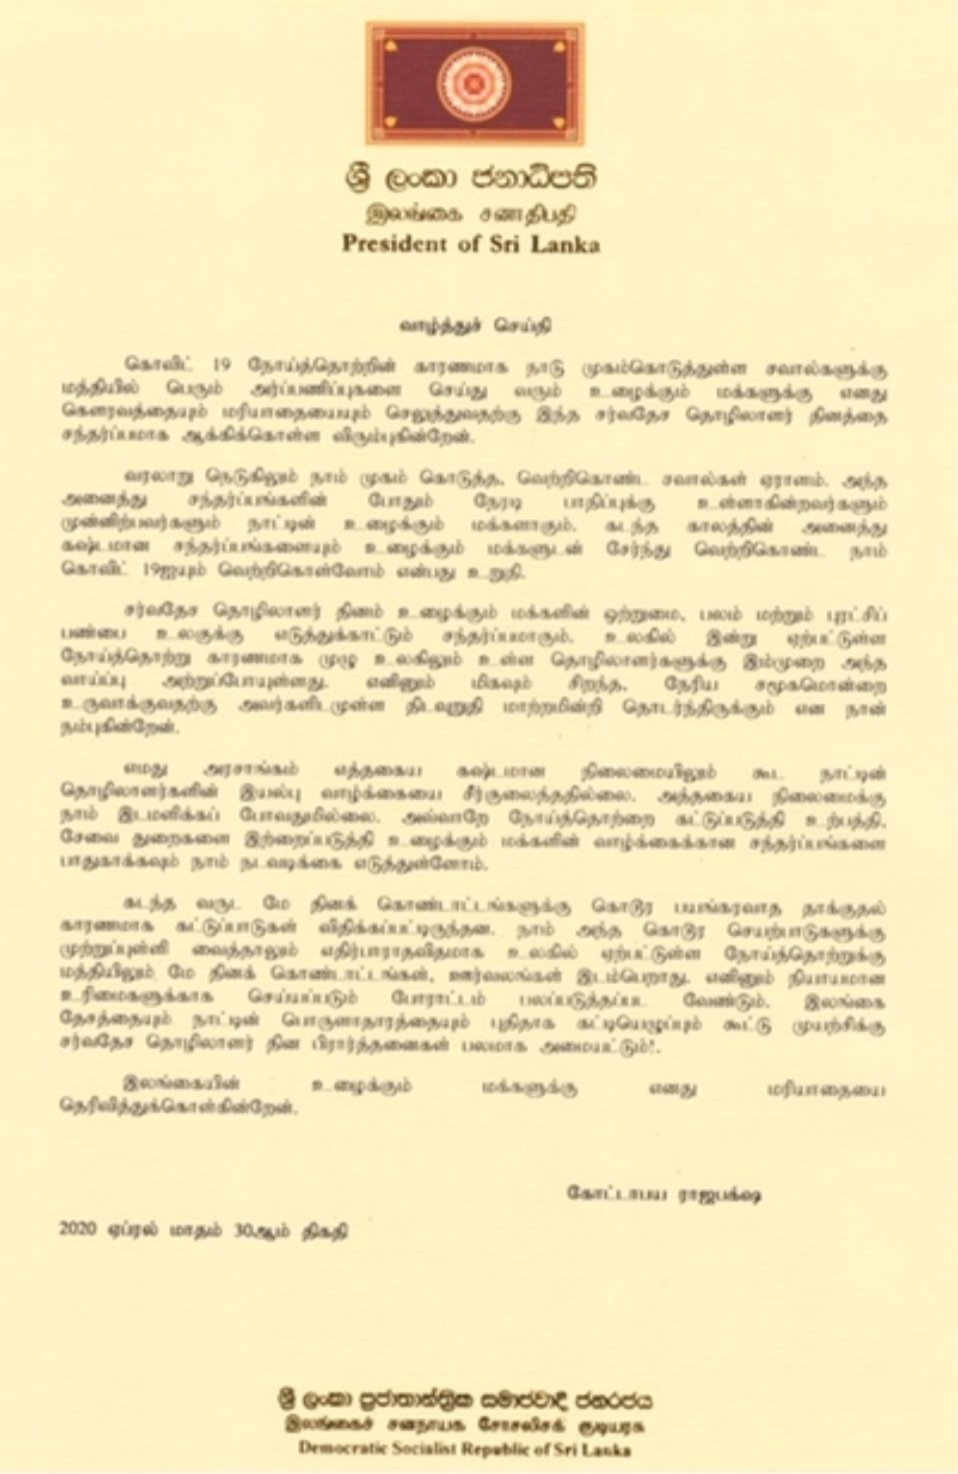 Message of H.E. the President of Sri Lanka on International Worker's Day 